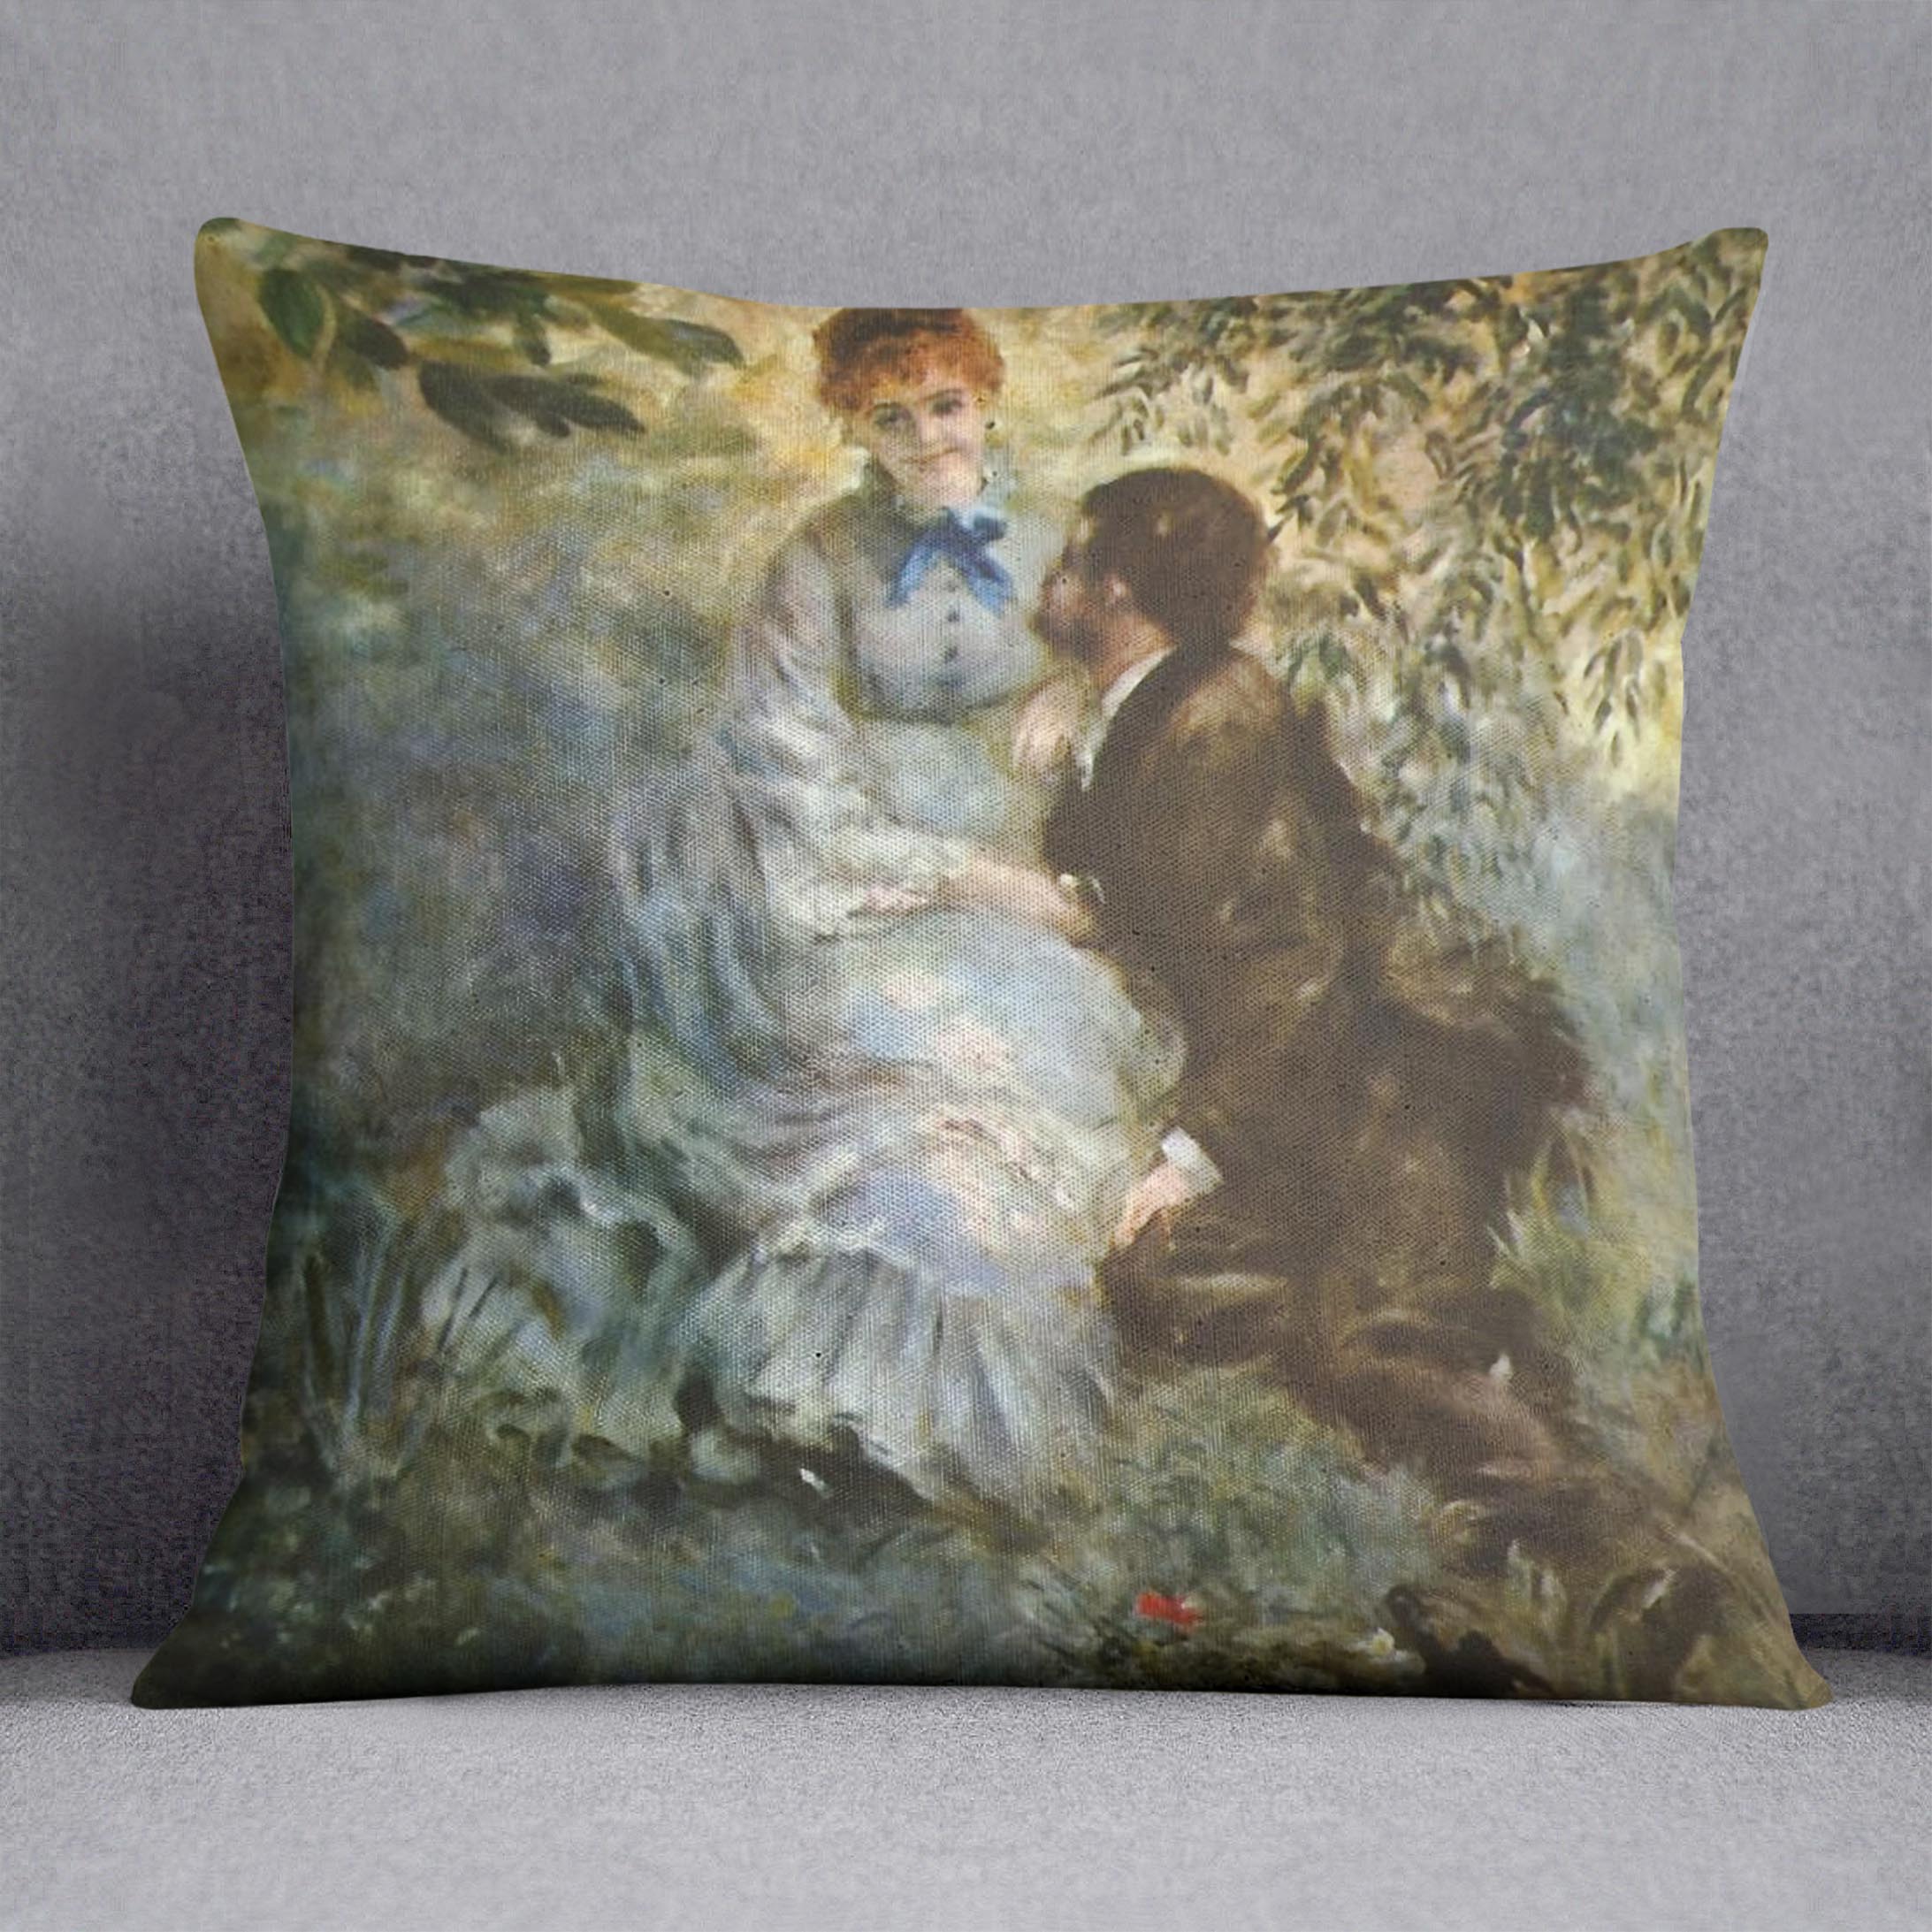 Pair of Lovers by Renoir Cushion